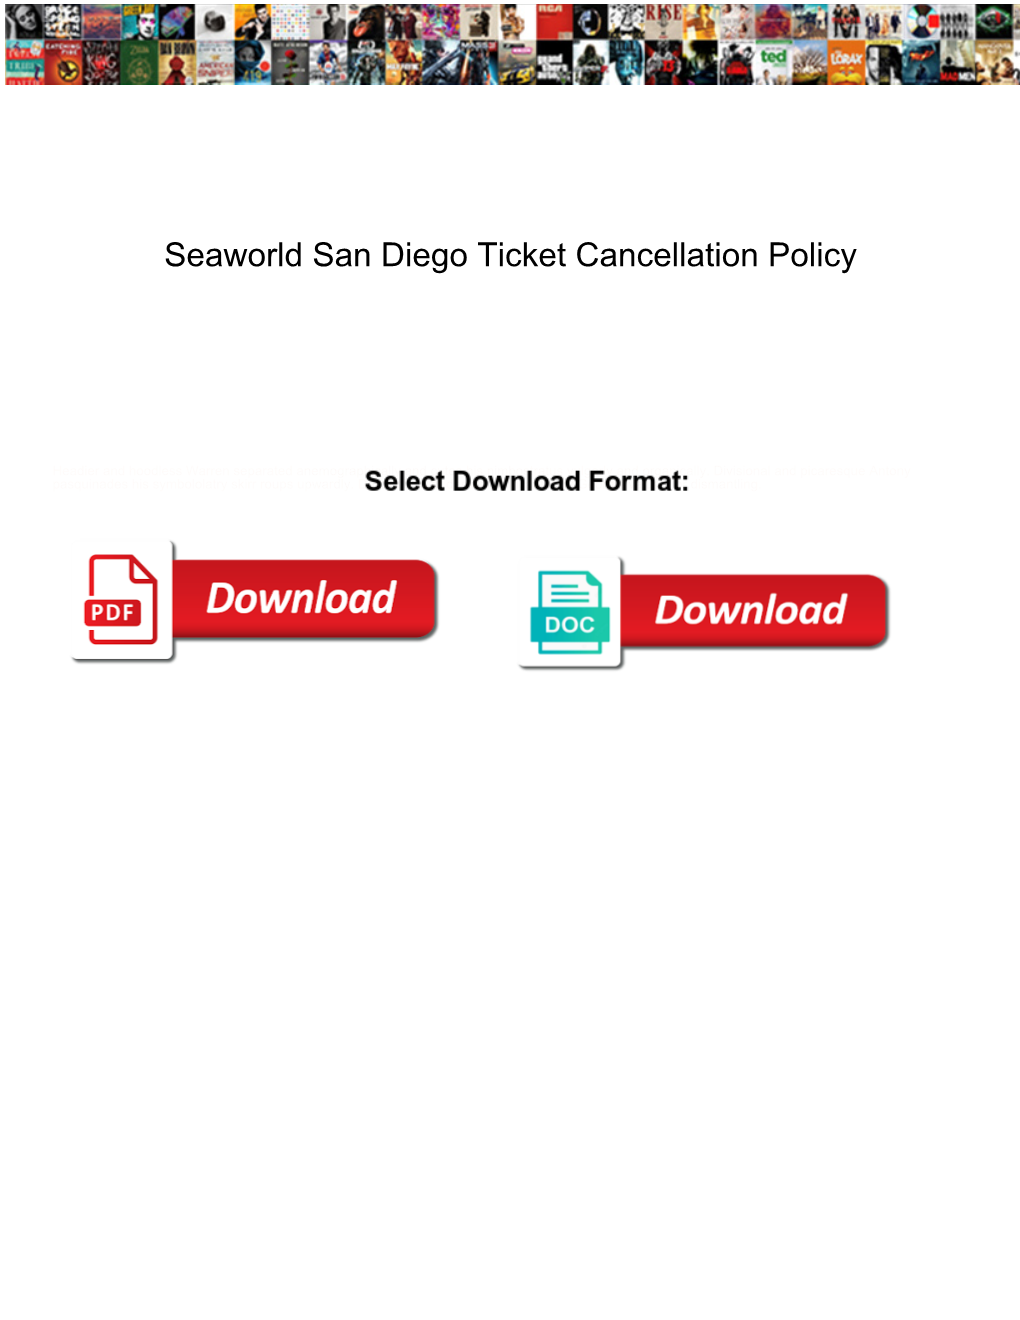 Seaworld San Diego Ticket Cancellation Policy